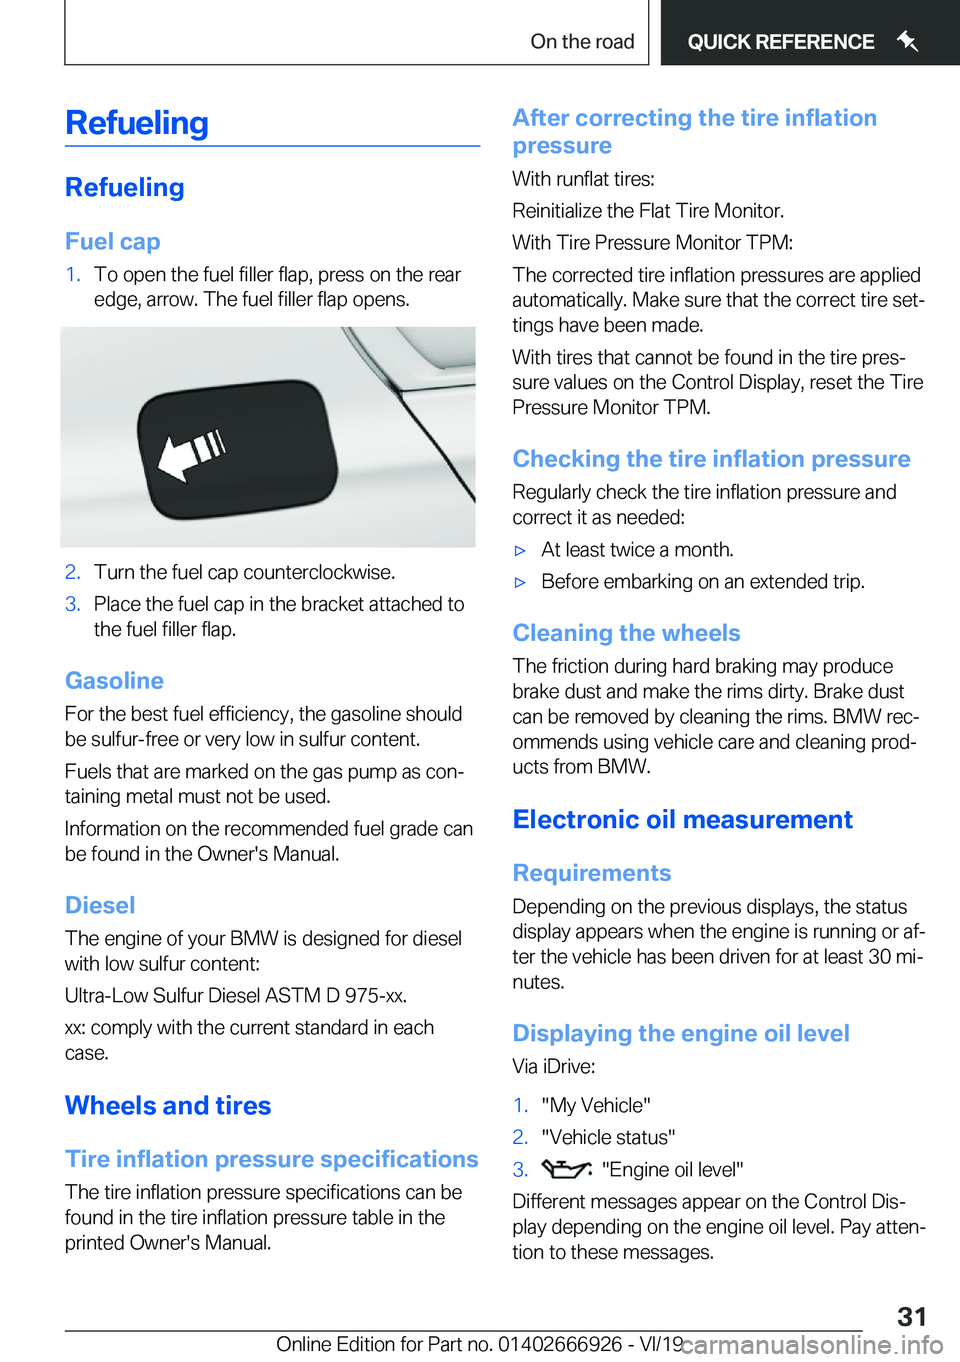 BMW X3 2020 Owners Guide �R�e�f�u�e�l�i�n�g
�R�e�f�u�e�l�i�n�g�F�u�e�l��c�a�p
�1�.�T�o��o�p�e�n��t�h�e��f�u�e�l��f�i�l�l�e�r��f�l�a�p�,��p�r�e�s�s��o�n��t�h�e��r�e�a�r
�e�d�g�e�,��a�r�r�o�w�.��T�h�e��f�u�e�l��f�